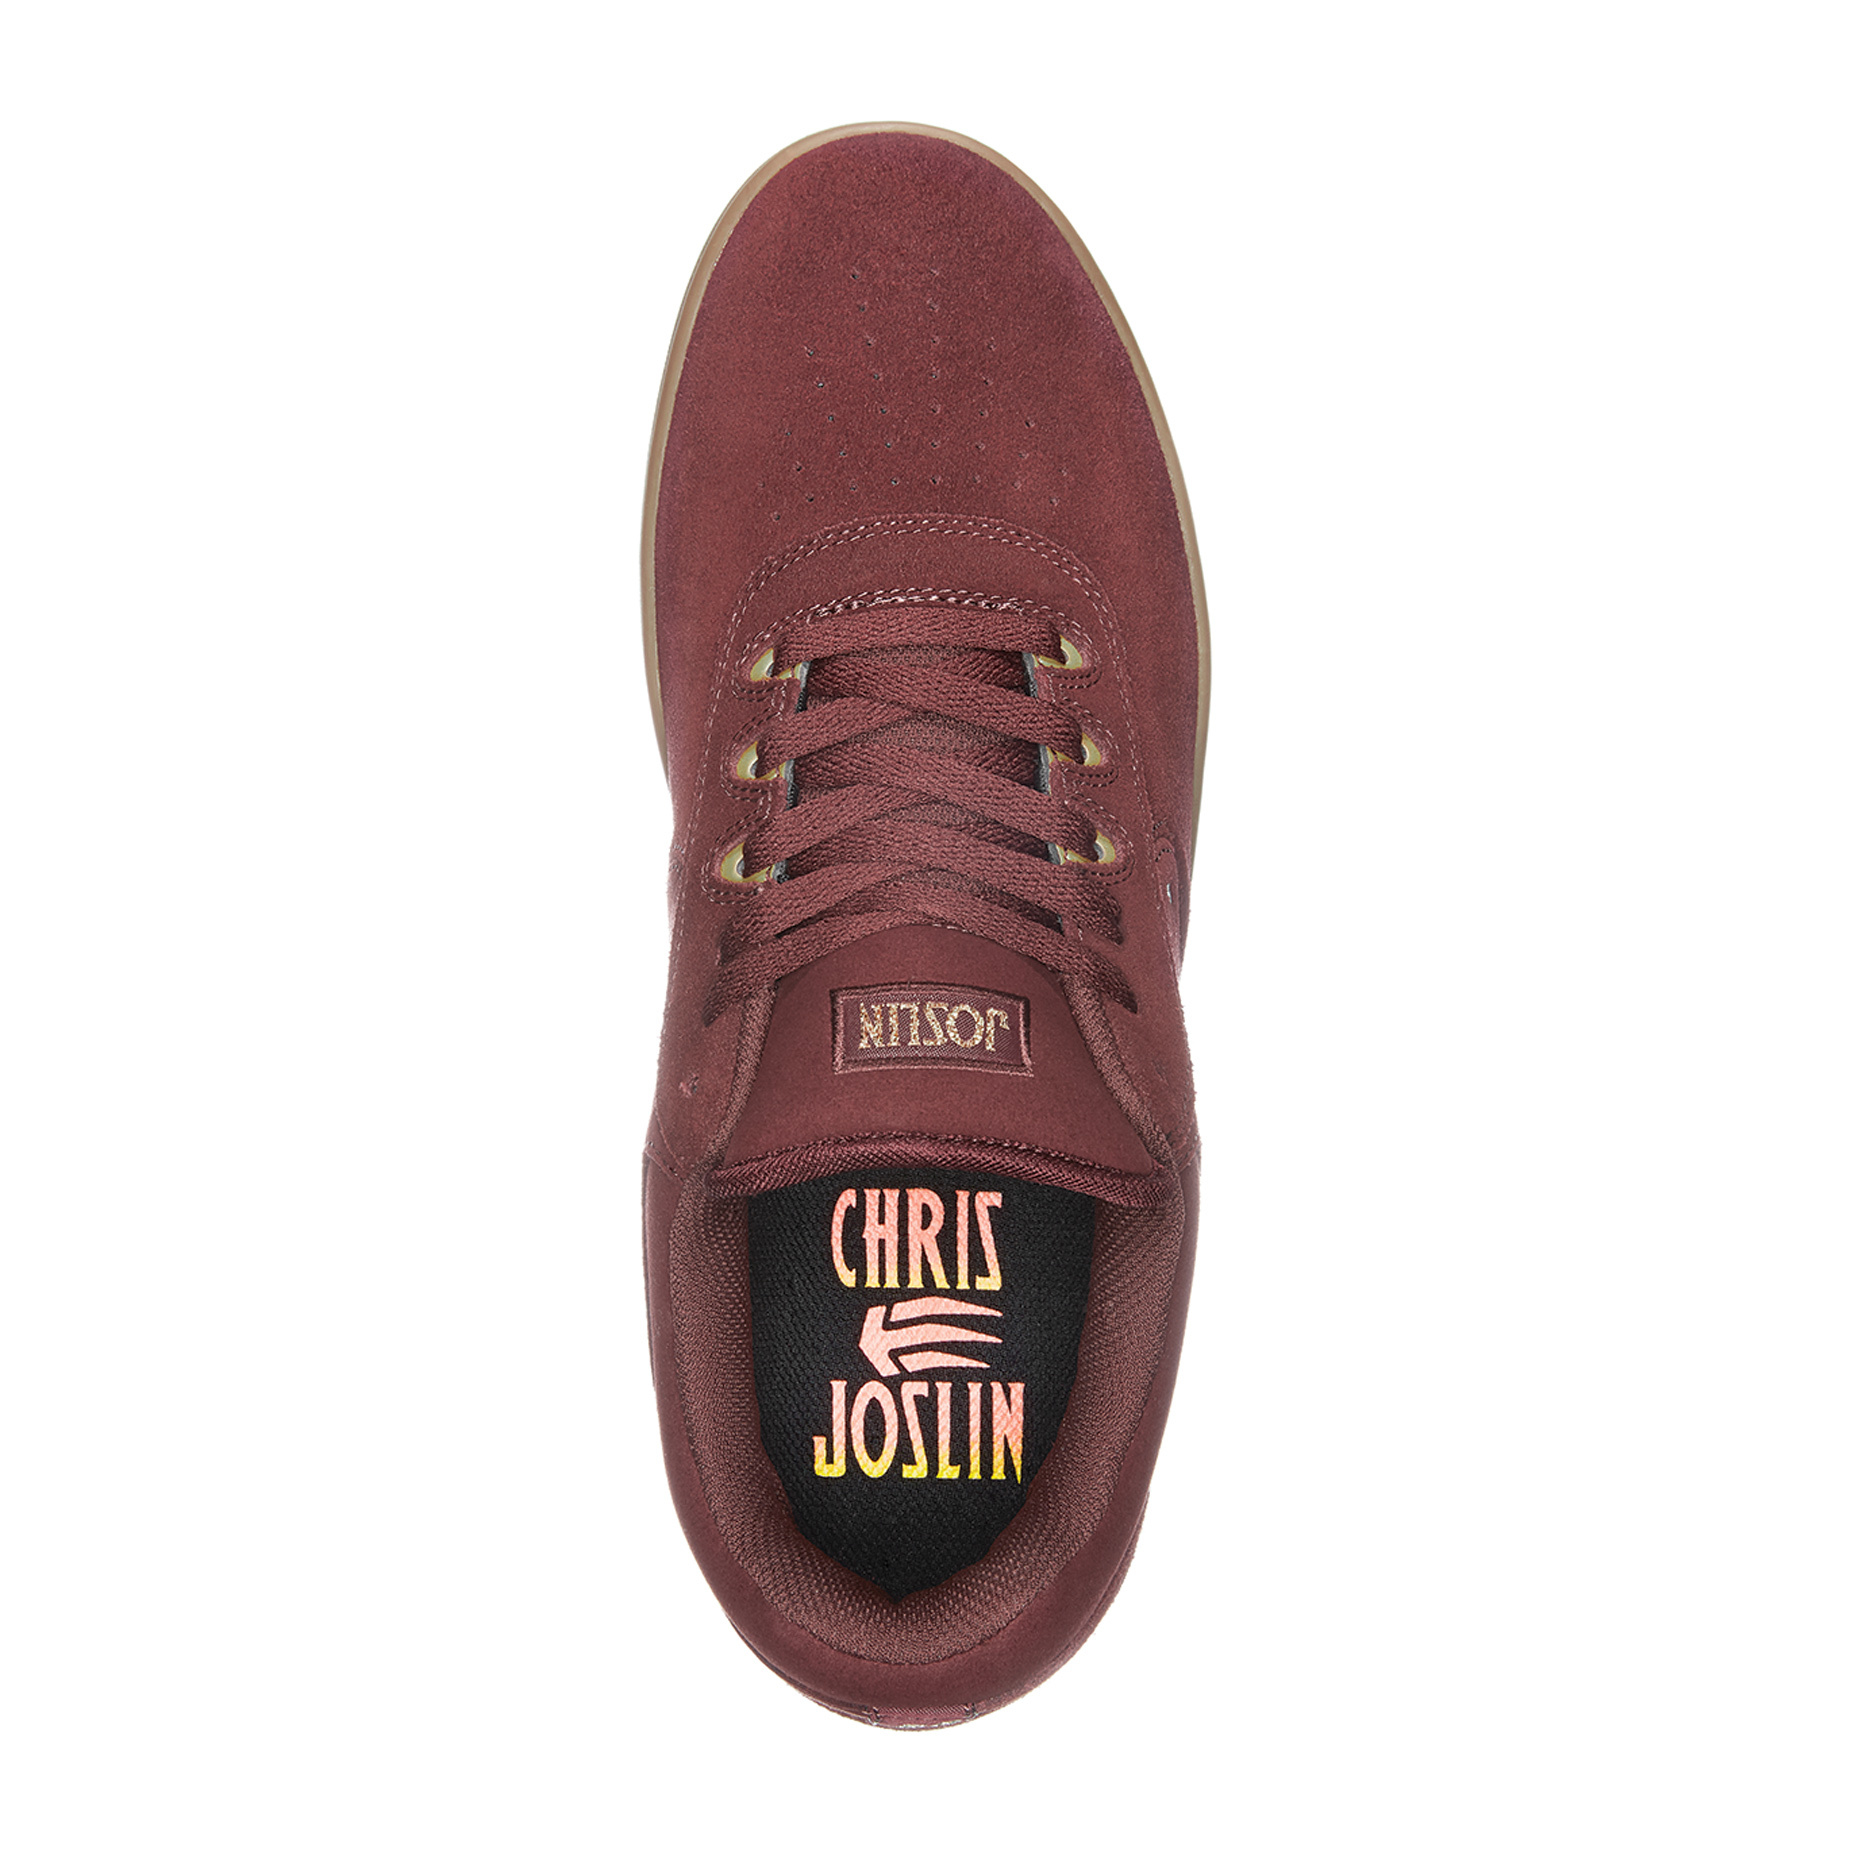 burgundy skate shoes